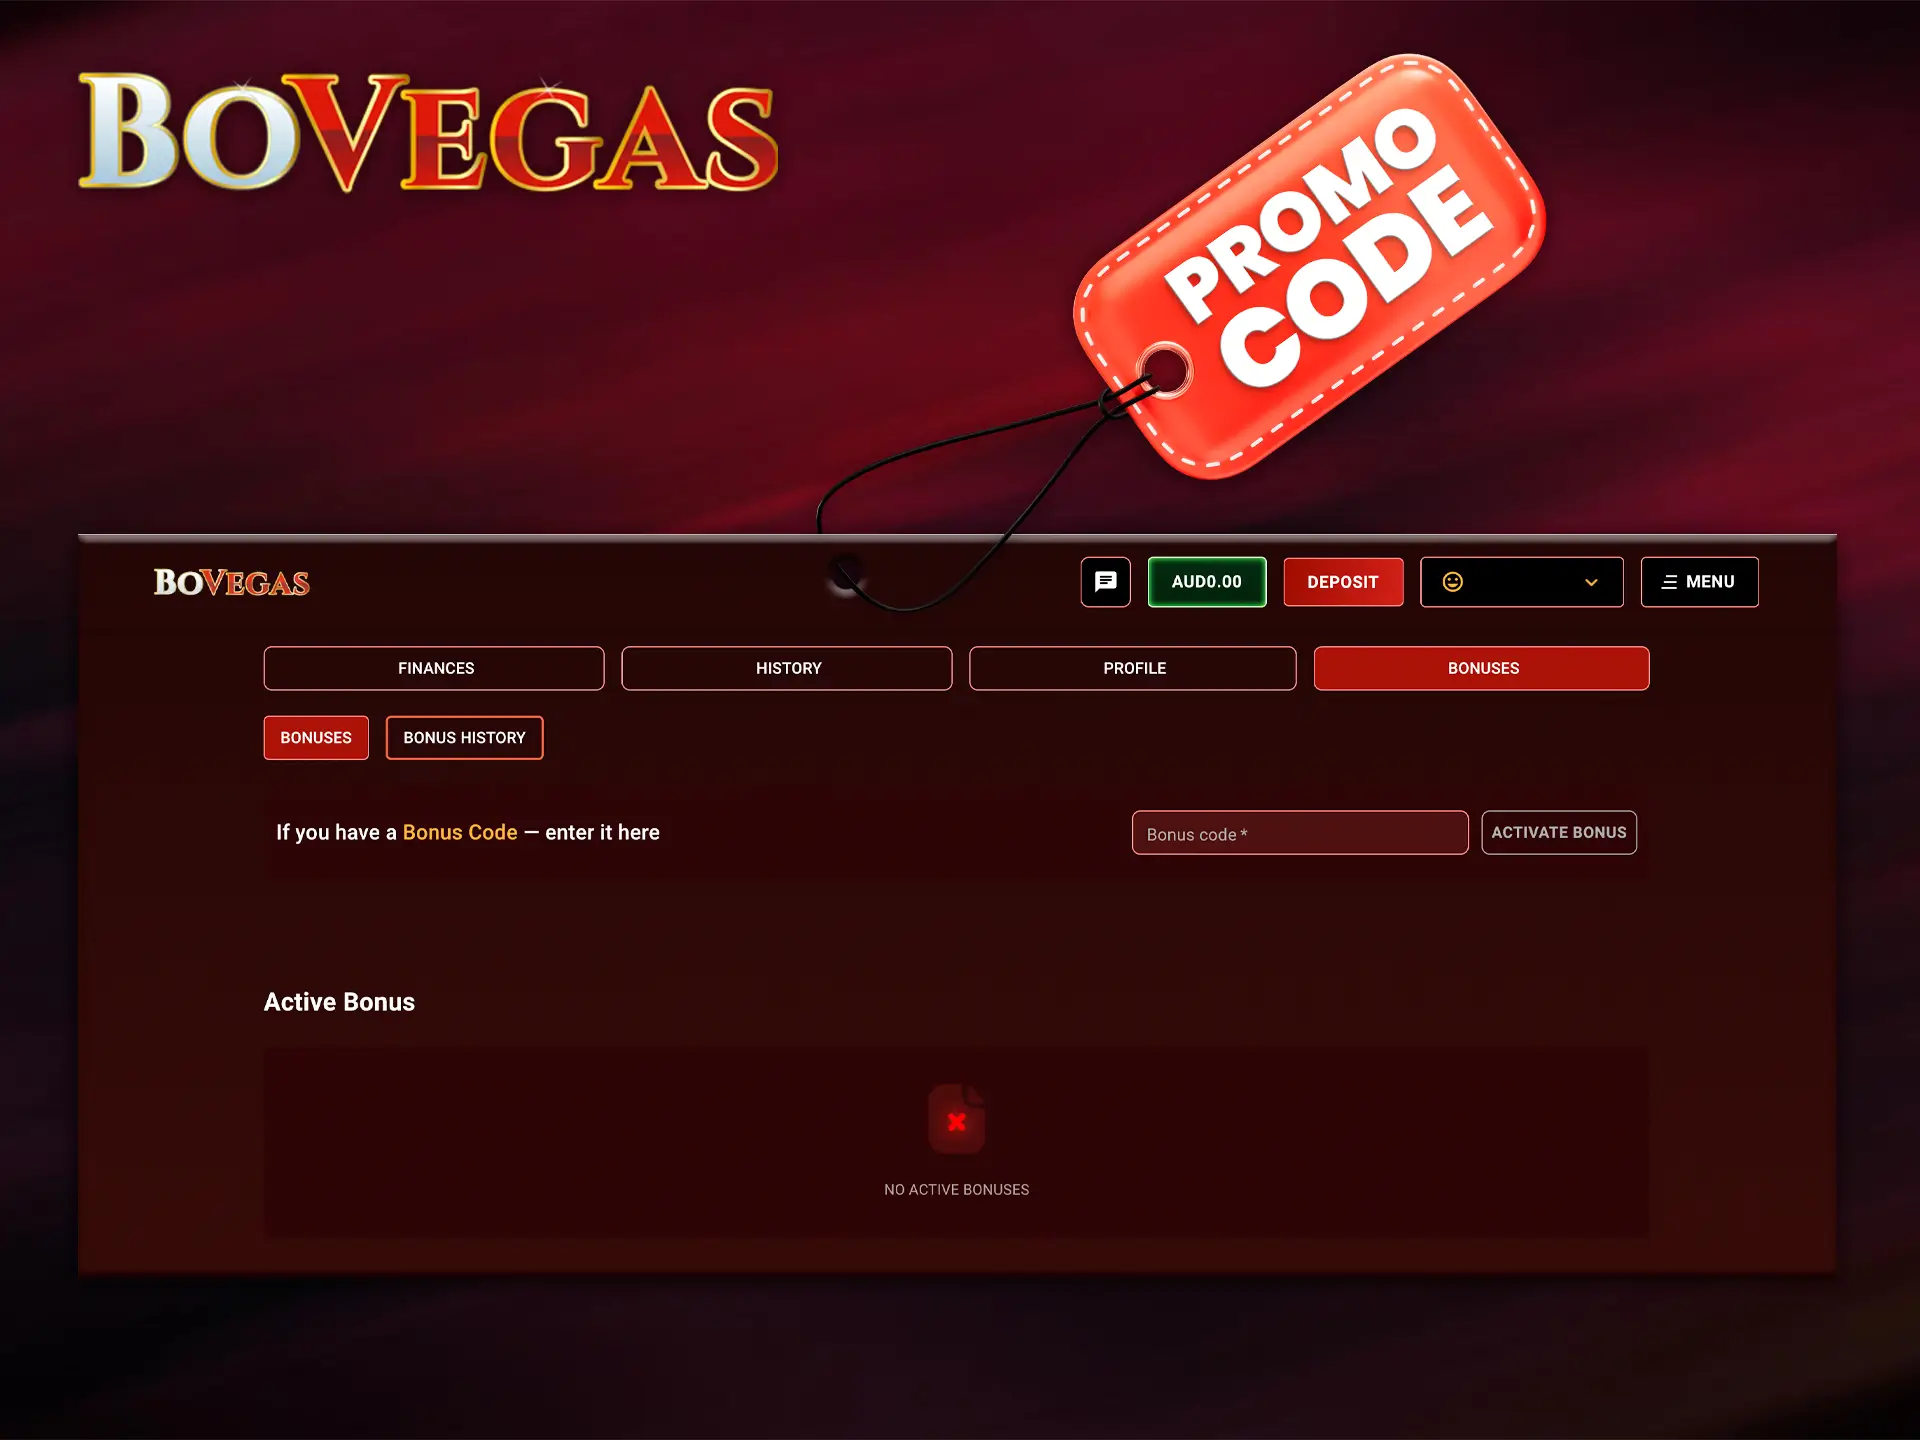 Use BoVegas promo code to increase your bonus amount.